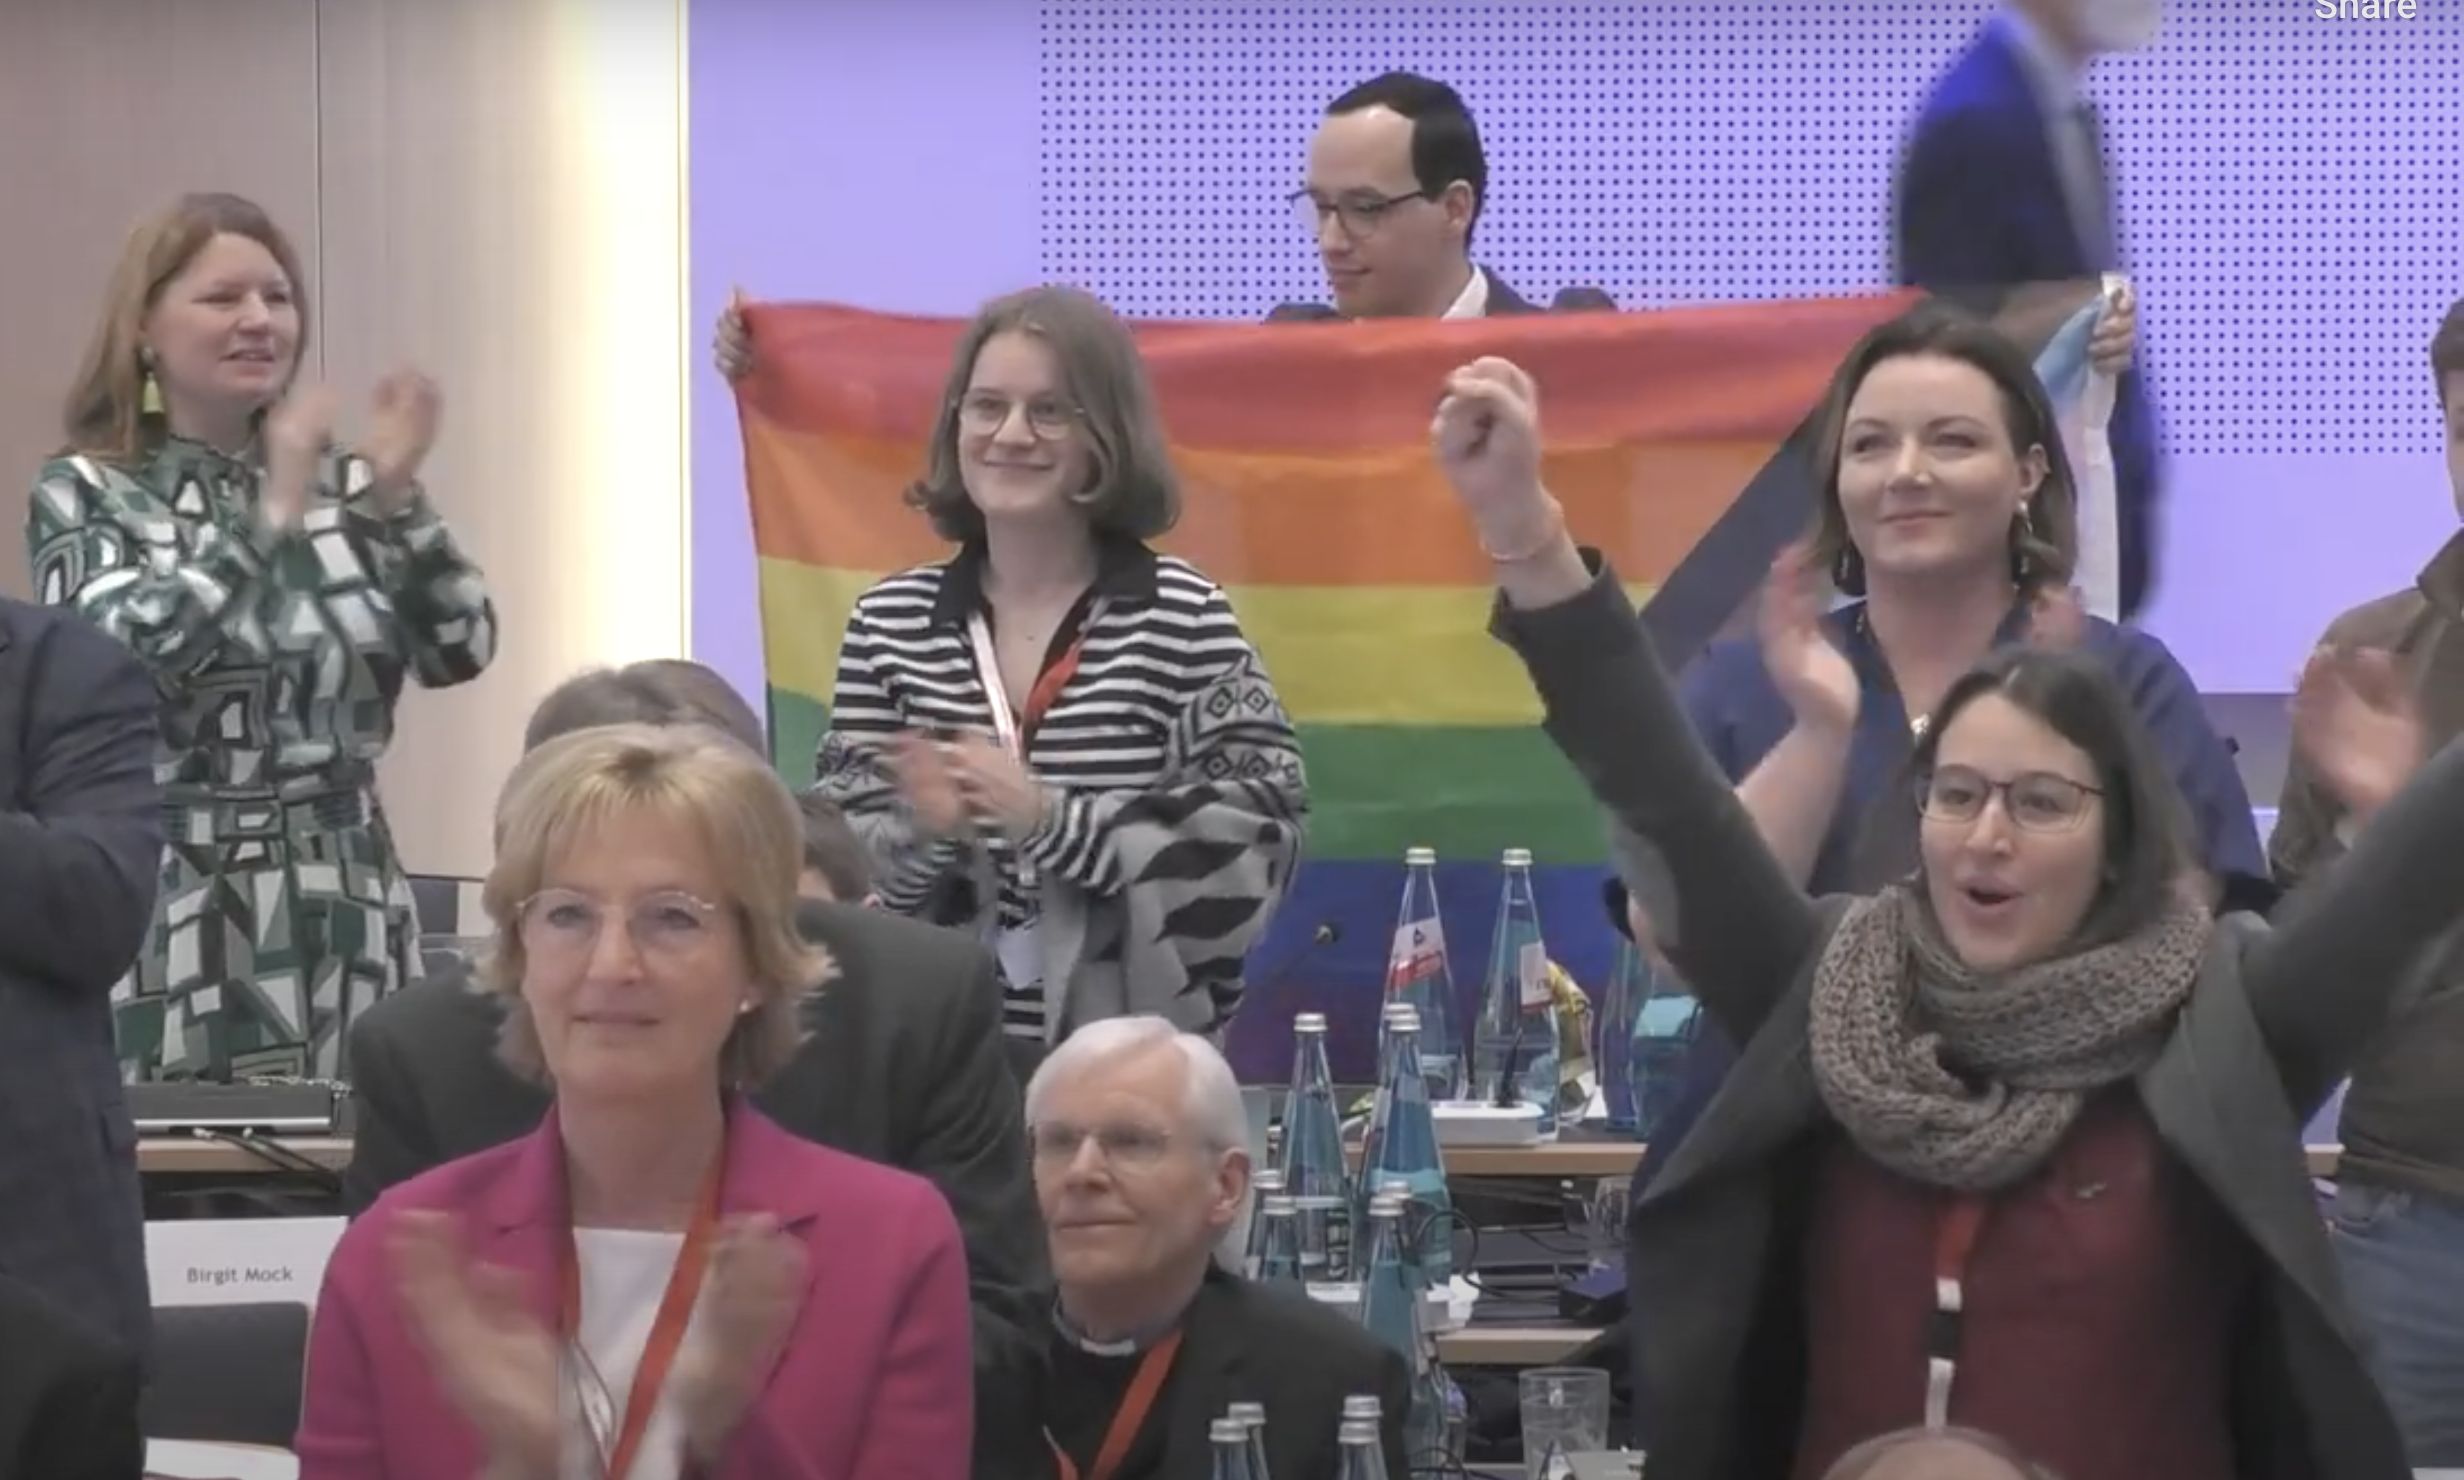 Women’s ordination, transgender ideology move forward at German Synodal Way